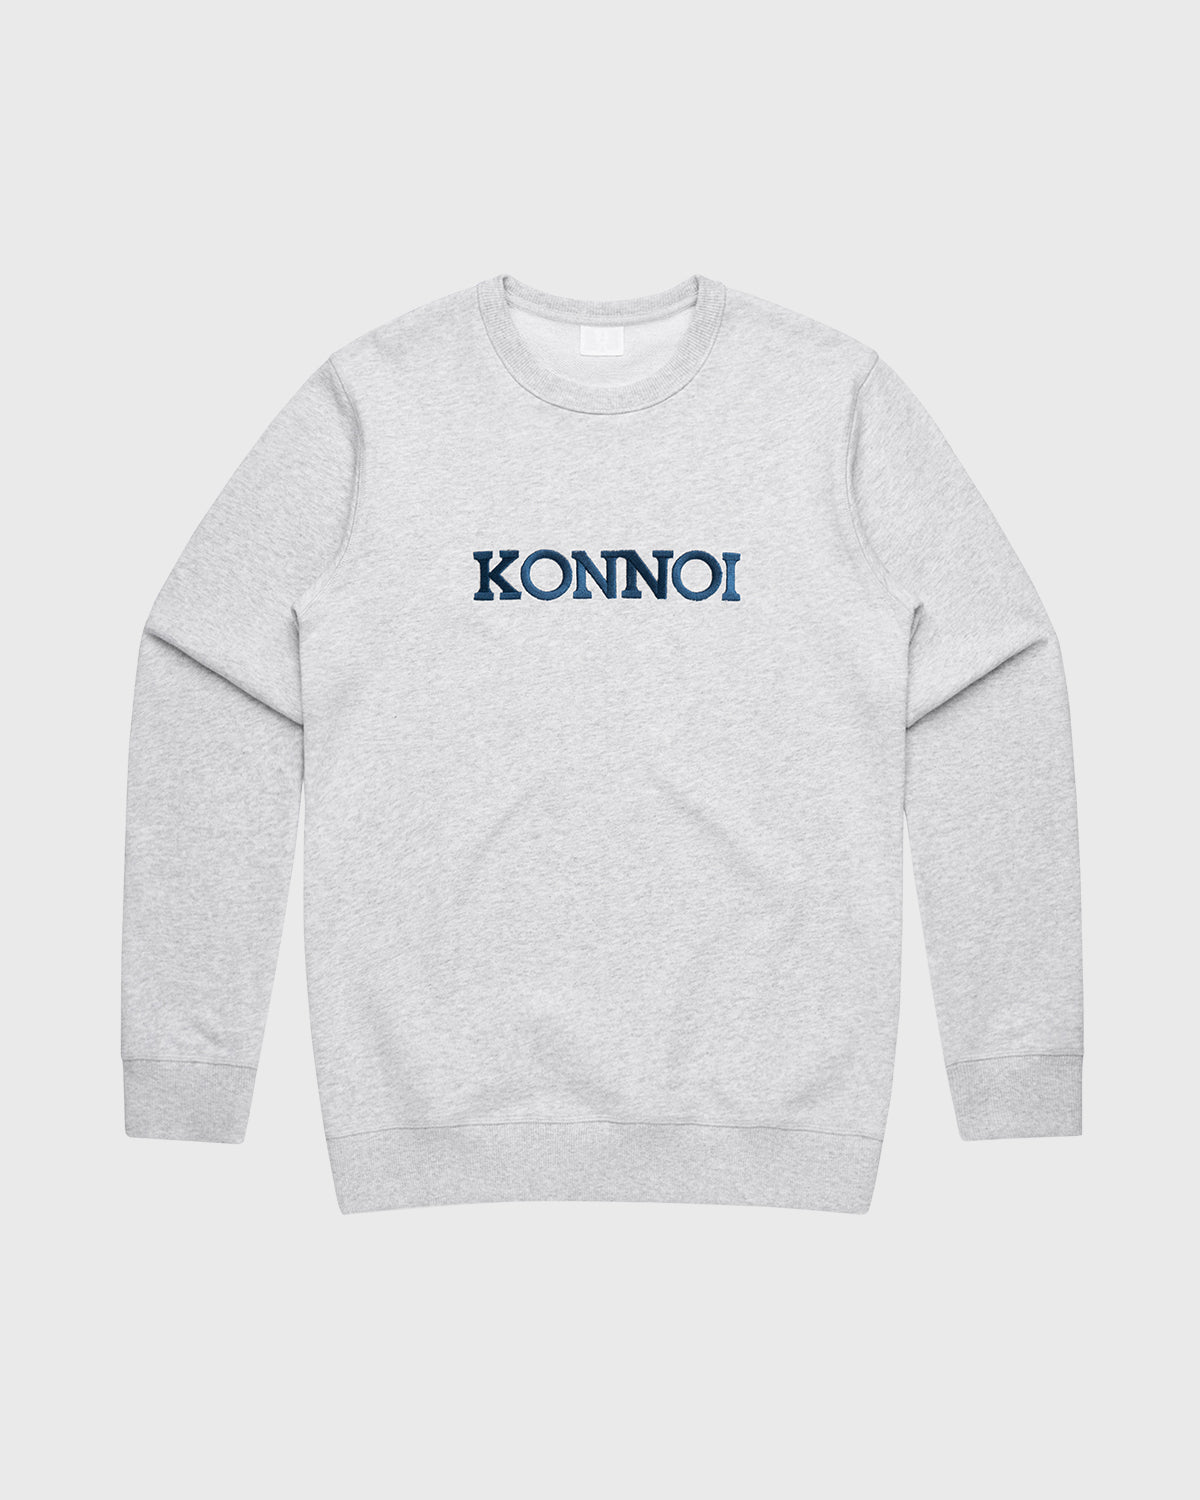 Konnoi Classic Sweatshirt Heather (Sample)